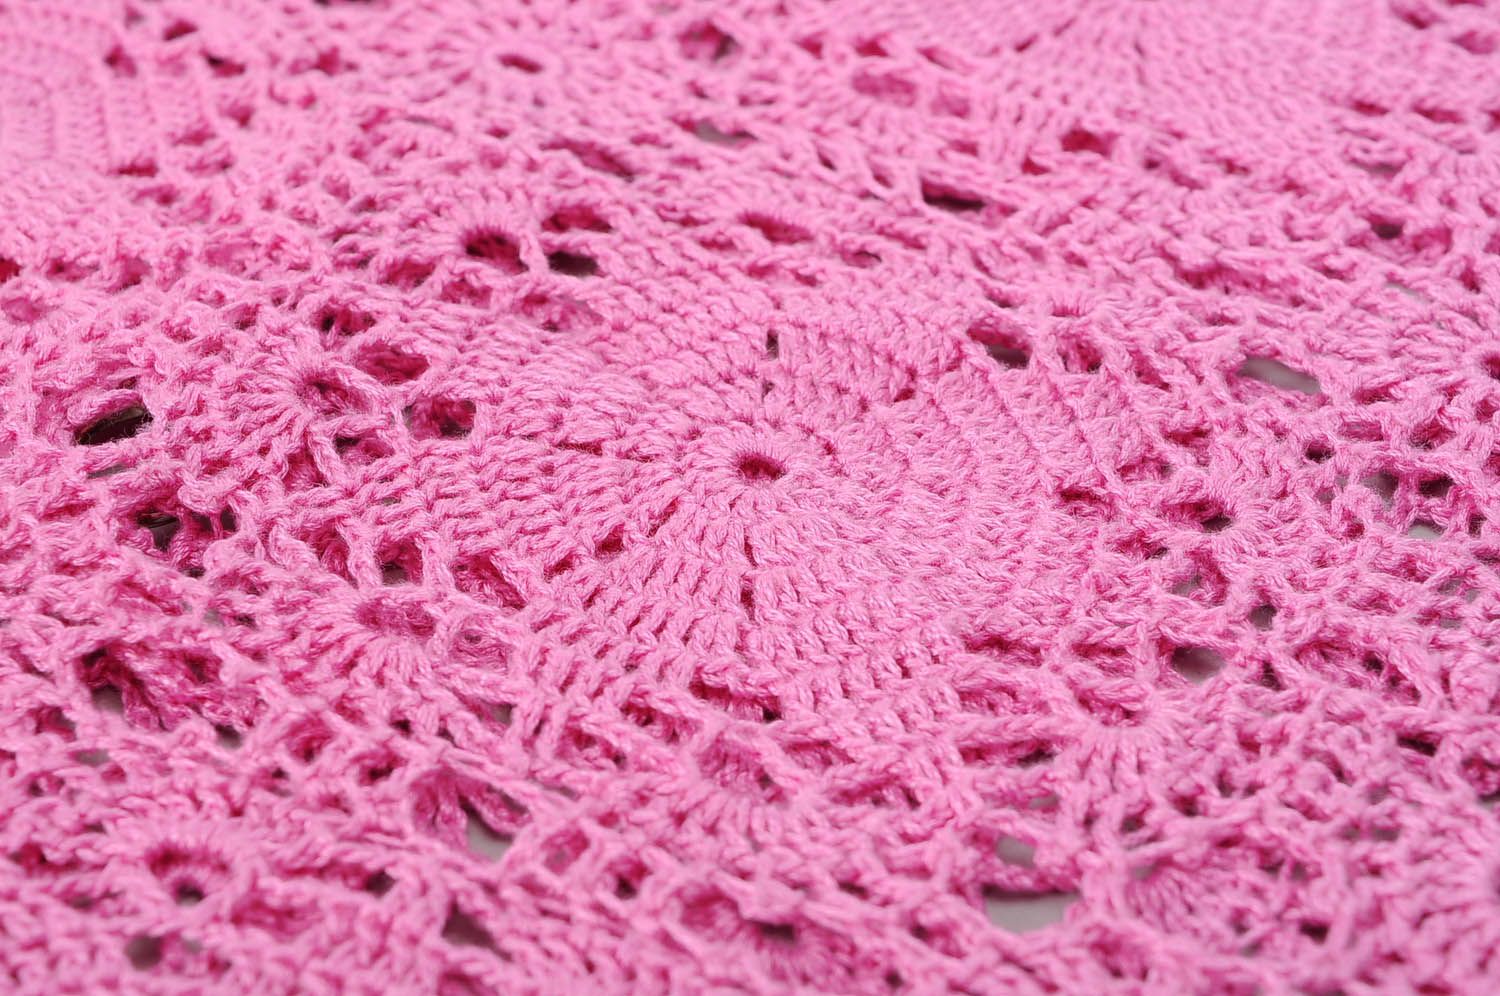 Robe rose tricotée au crochet photo 5